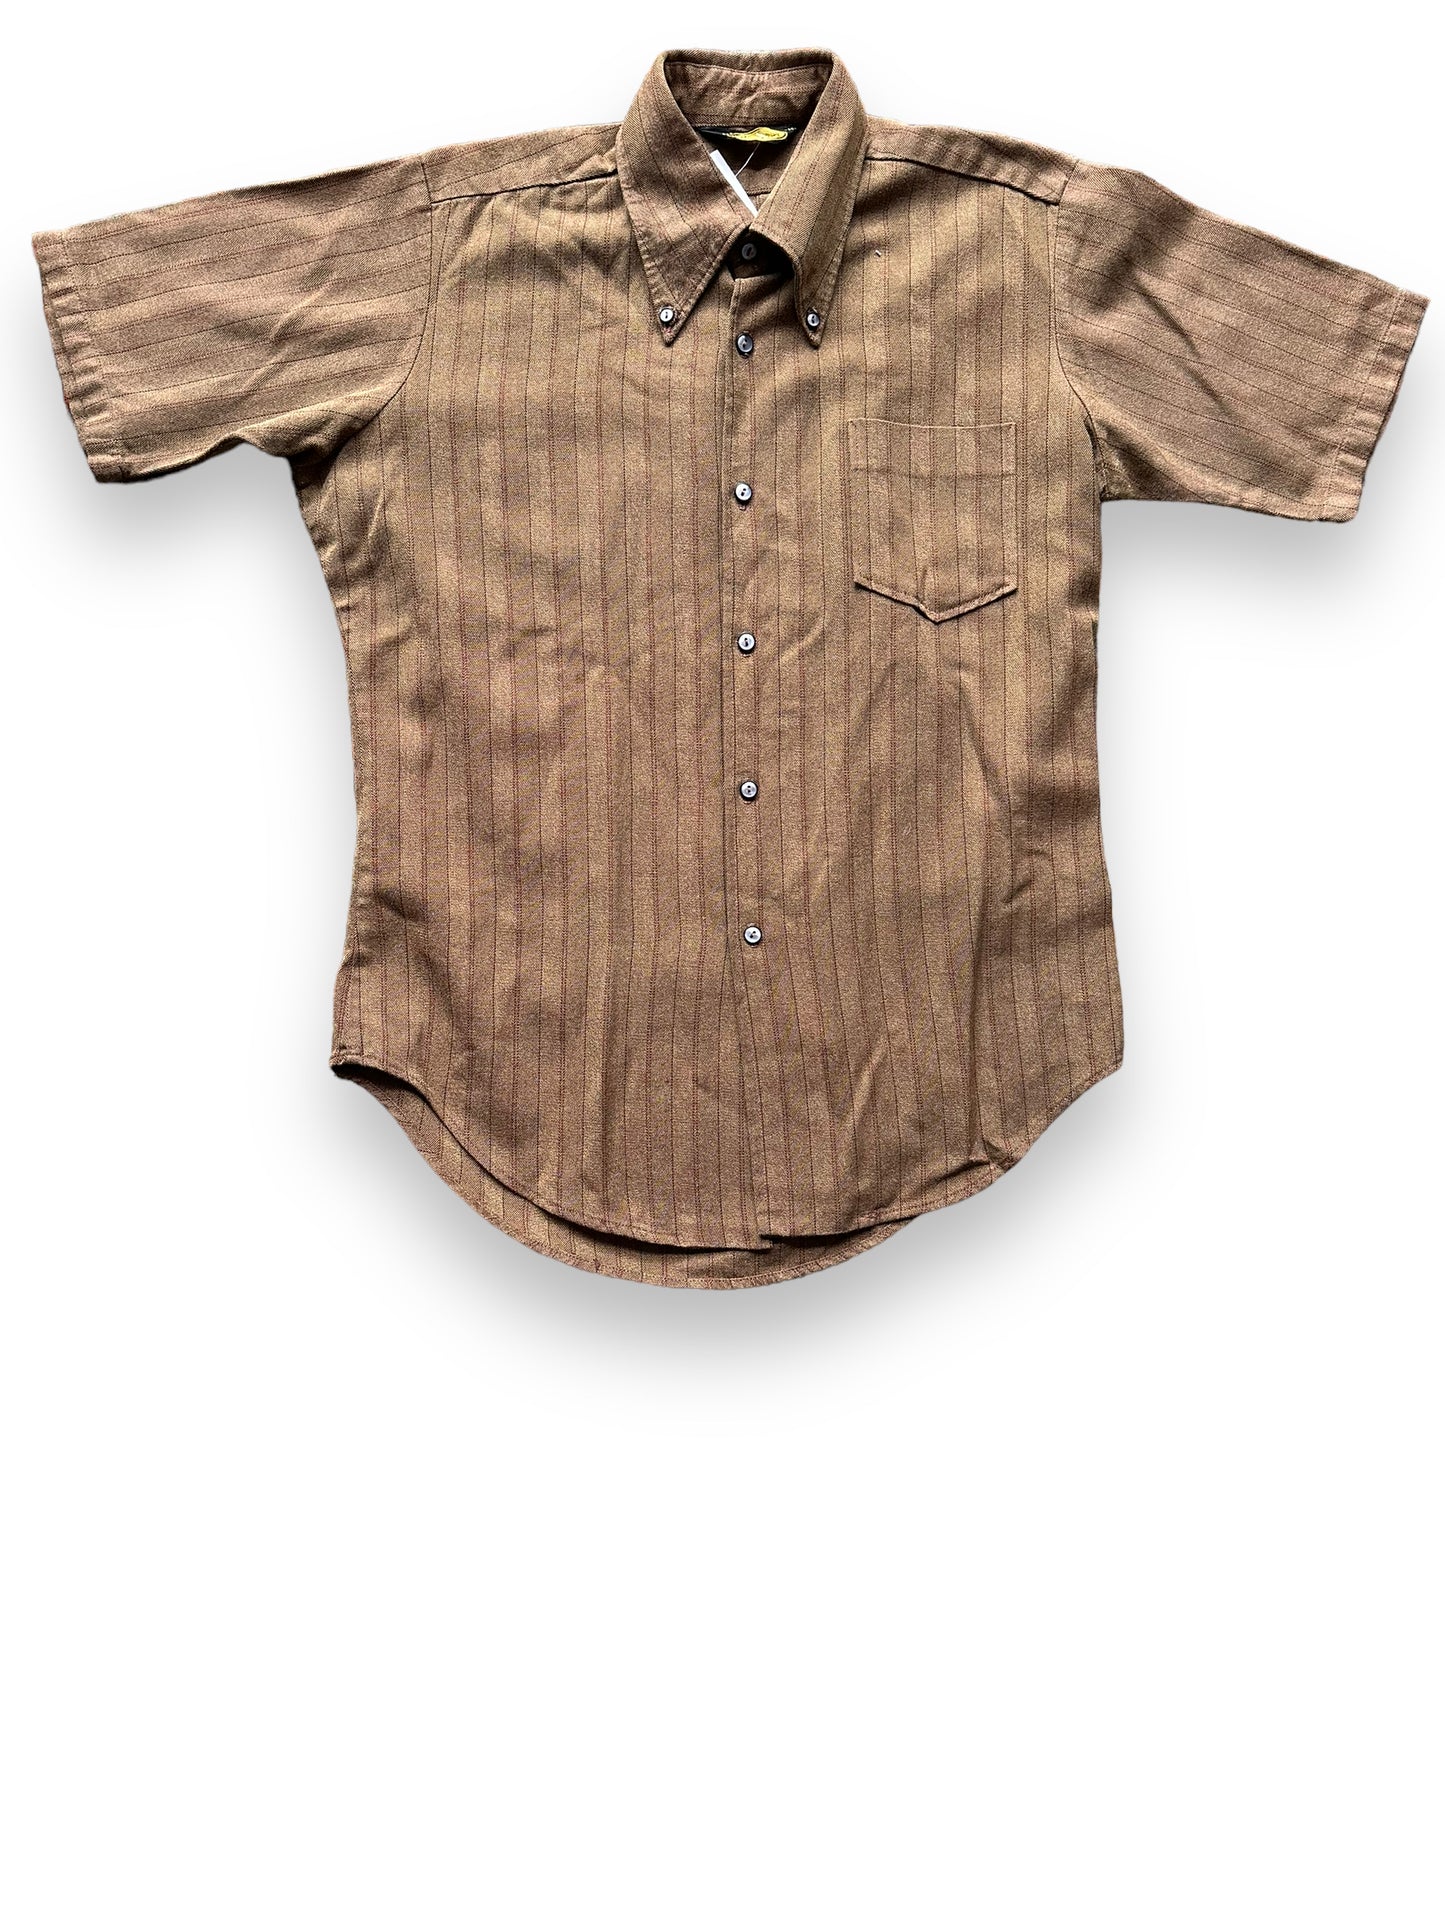 Front View of Vintage Davinci Brown Stripes Short Sleeve Button Up Shirt SZ M | Vintage Button Up Shirt Seattle | Barn Owl Vintage Seattle